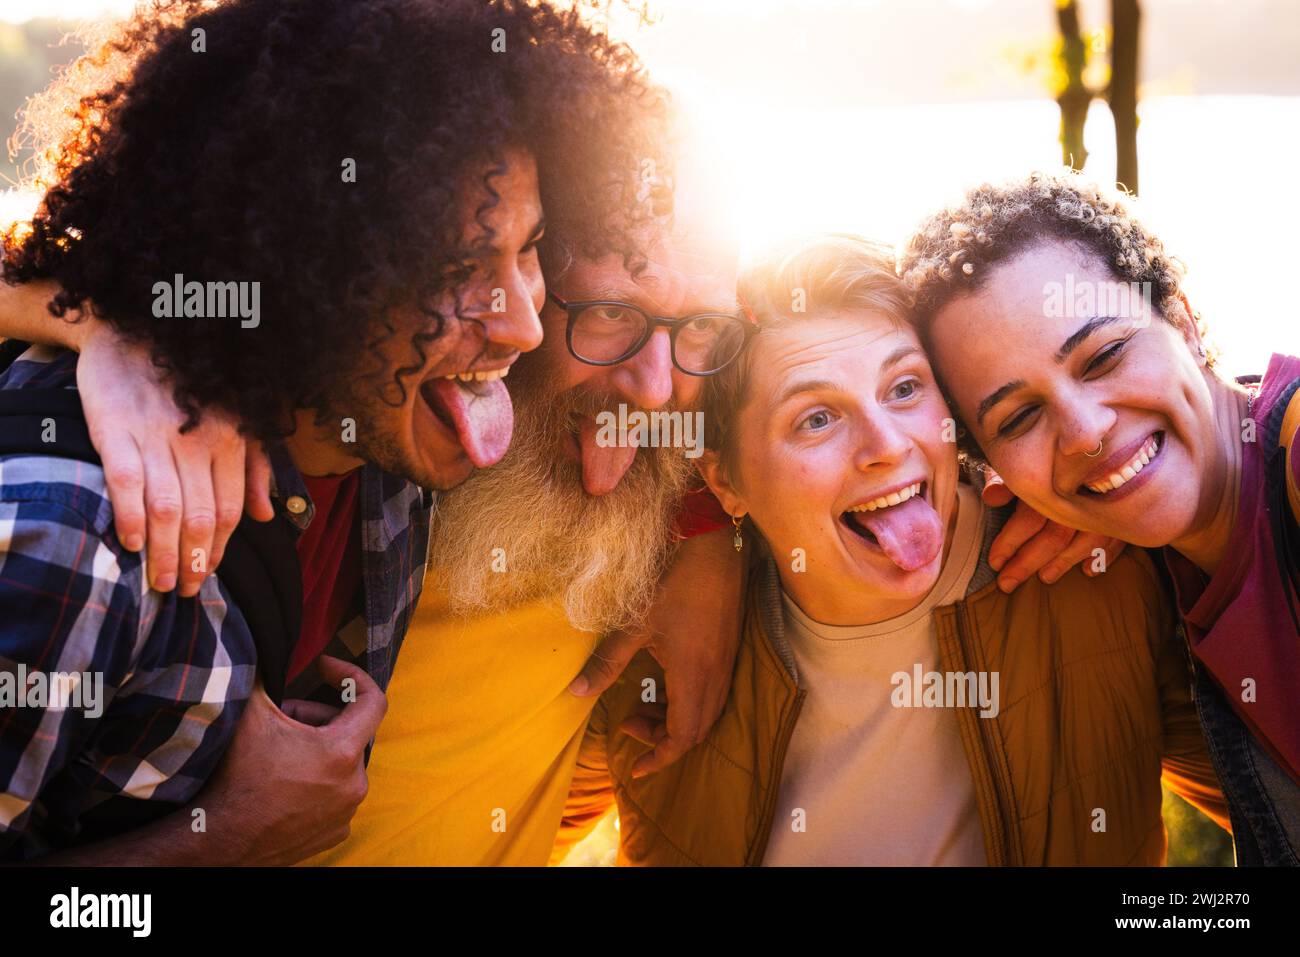 Playful Bonding: Friends Sharing Joyful Moments Stock Photo